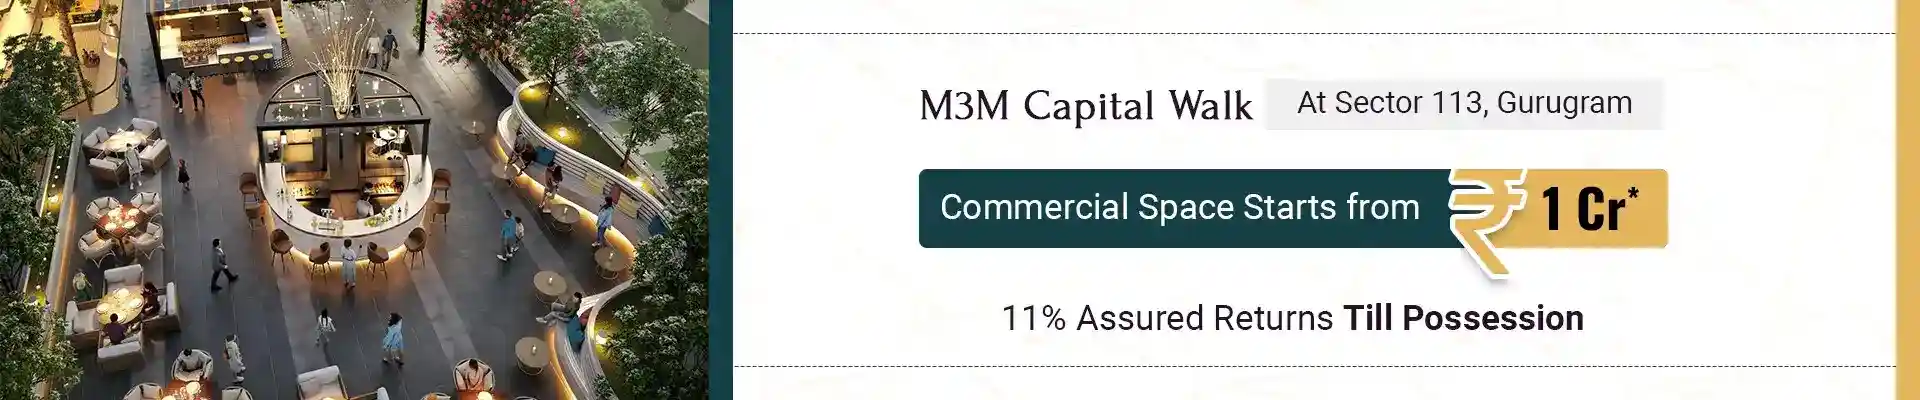 m3m-capital-walk-strip-image-onkar-real-estate-solution